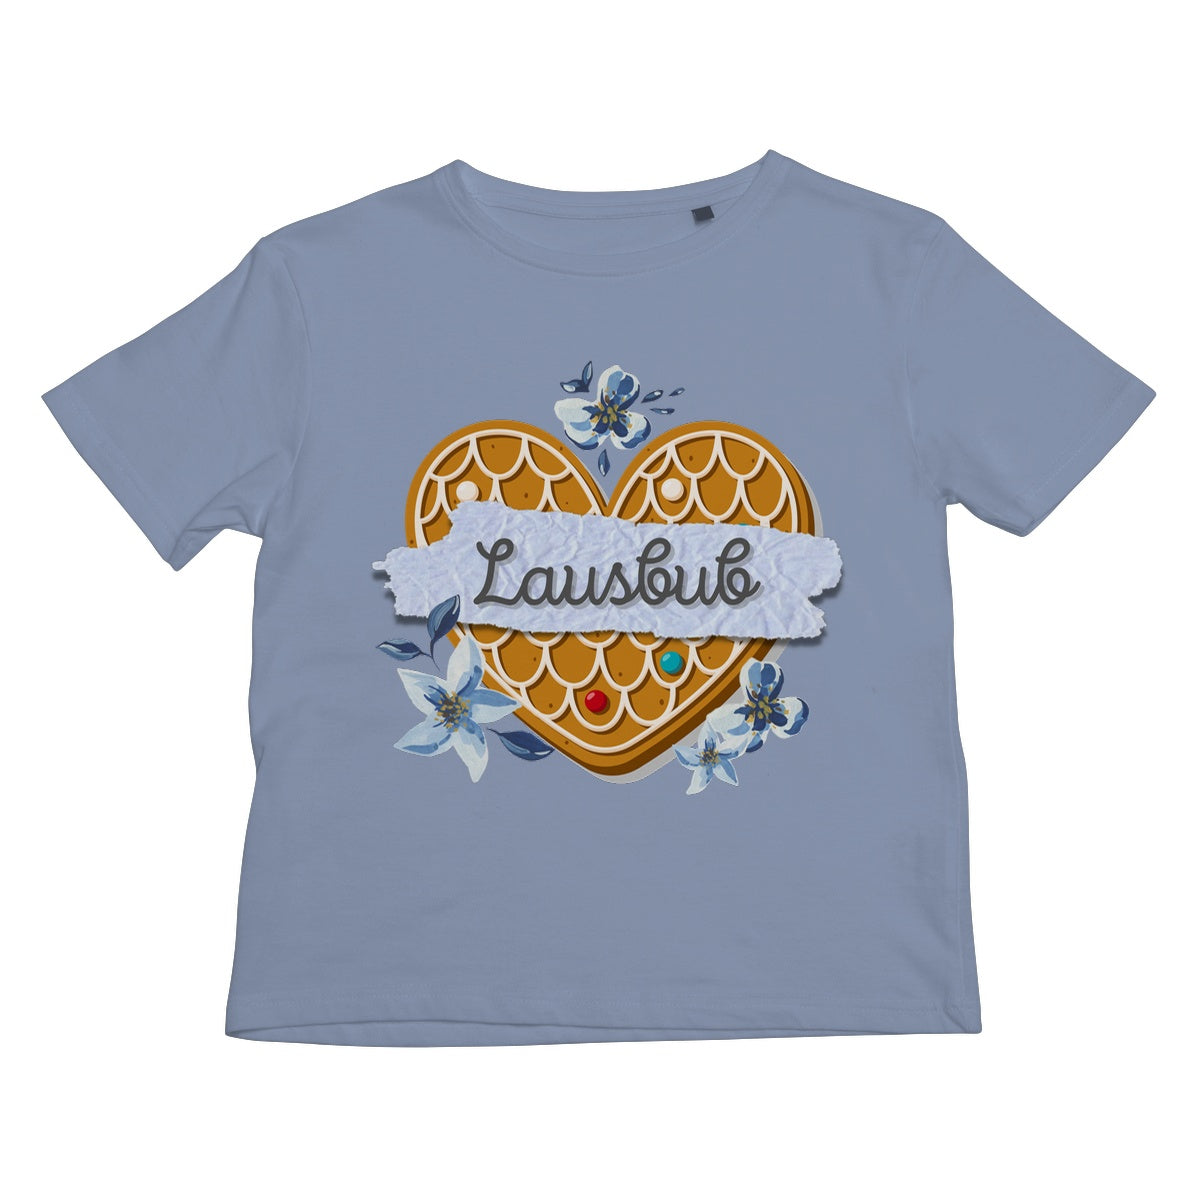 Boy's Bavarian Graphic T-Shirt "Lausbub" gingerbread heart & floral print - 6 colours - Bavari Shop - Bavarian Outfits, Dirndl, Lederhosen & Accessories